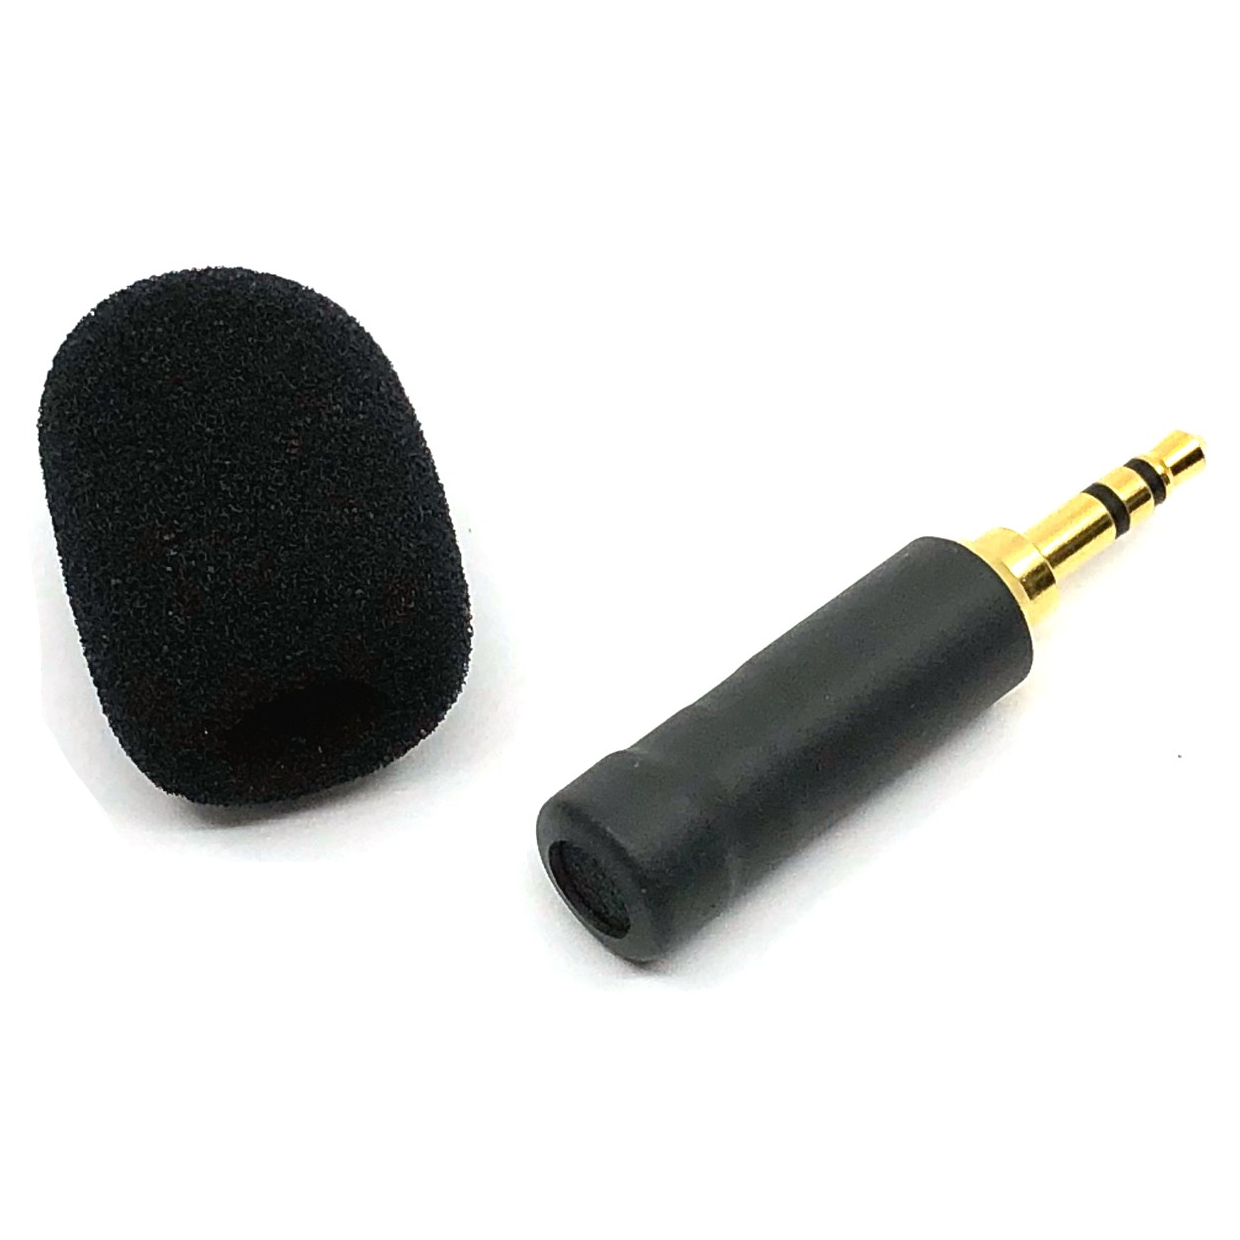 Ultra-high sensitivity professional mini microphone Questions & Answers